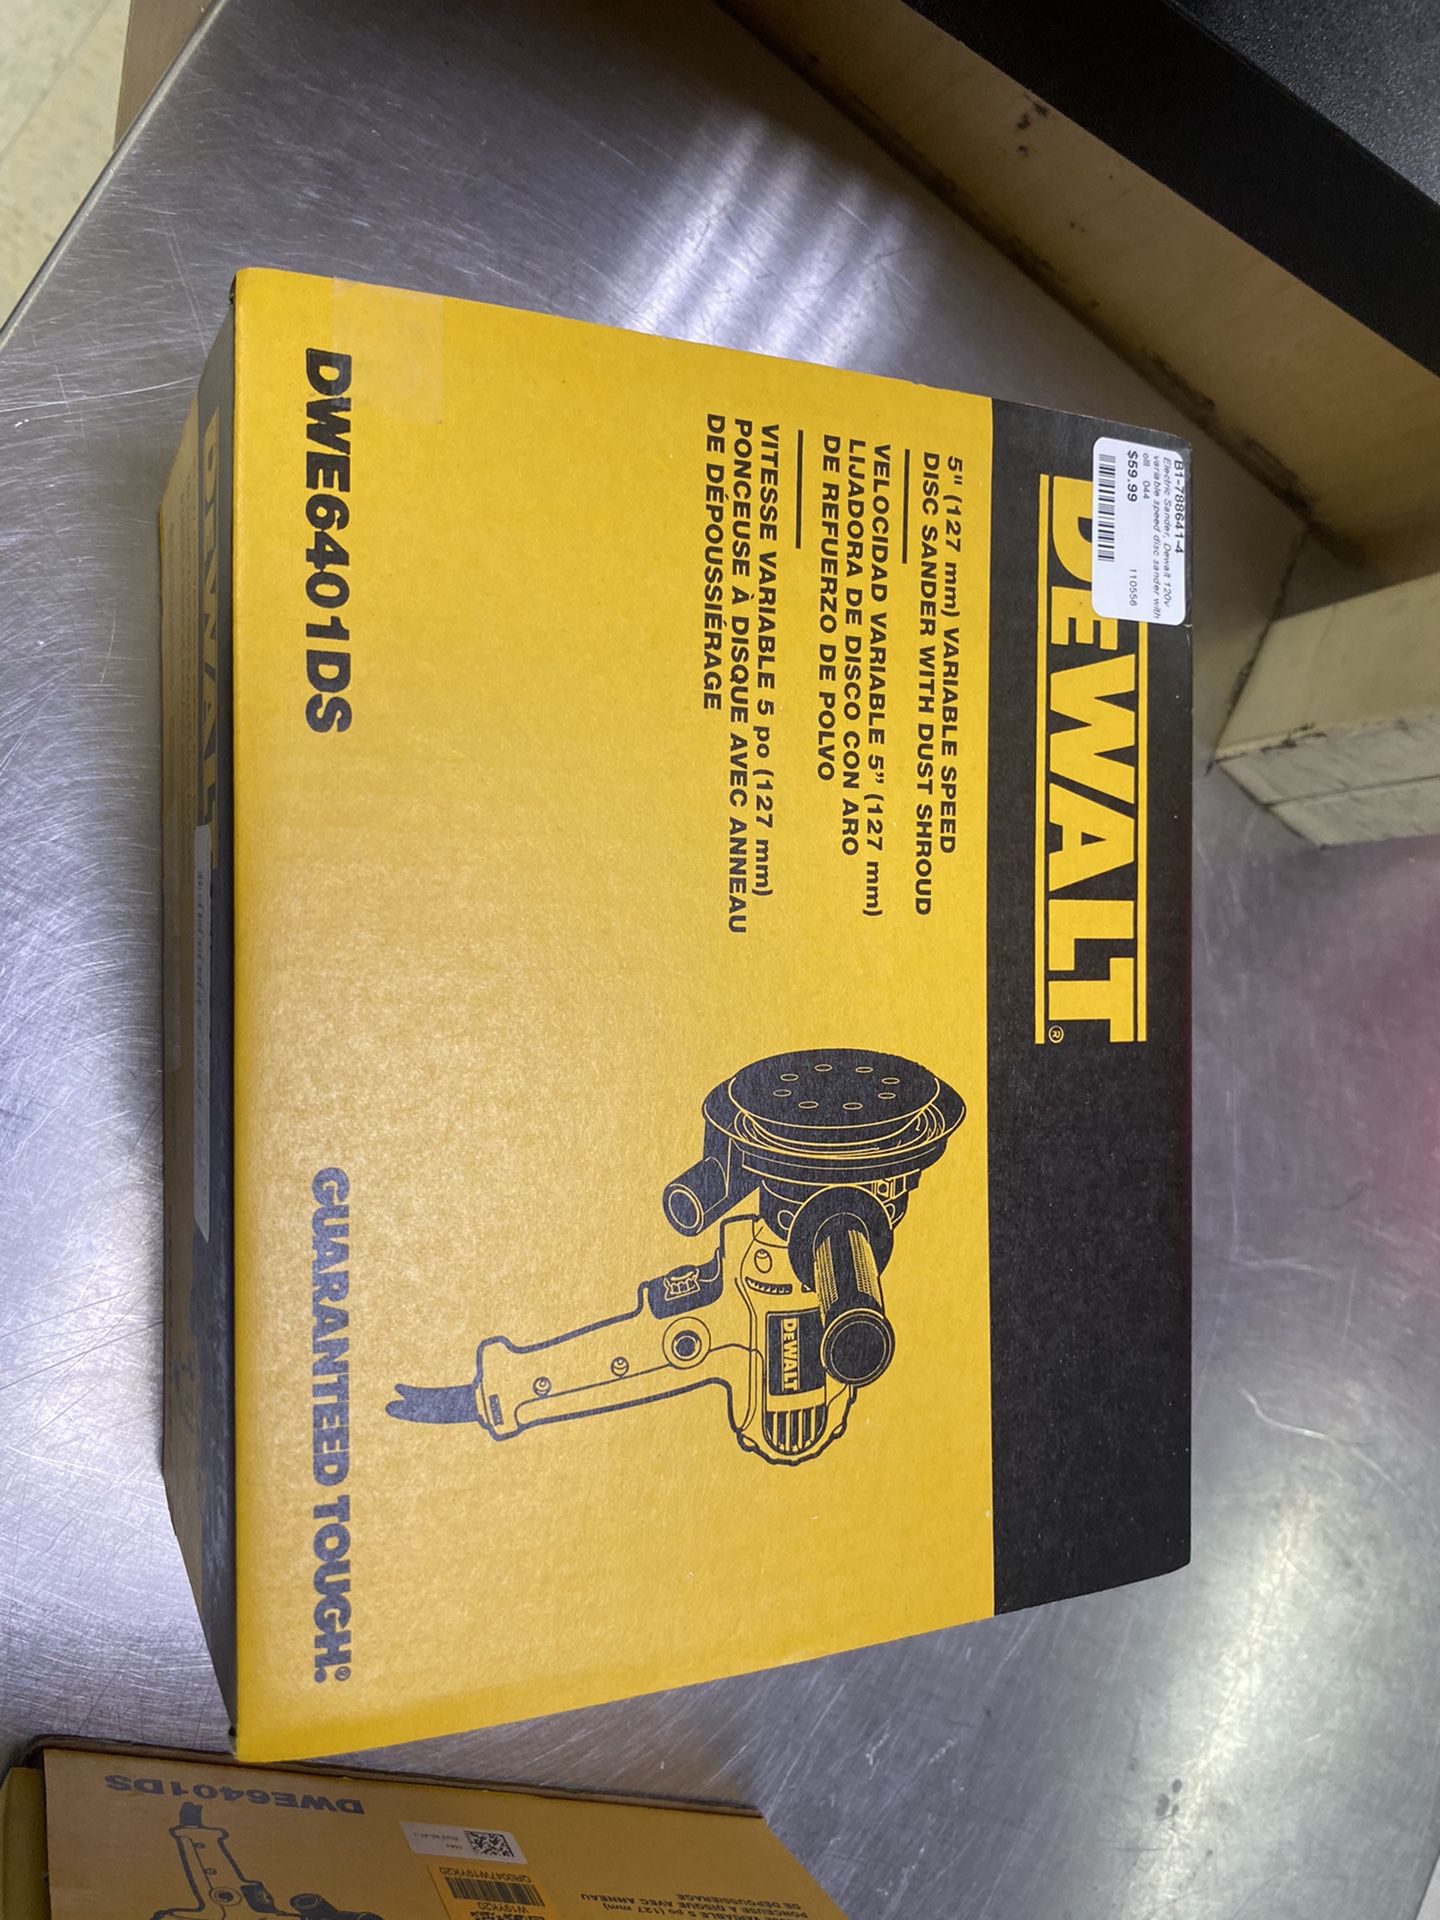 Brand New Dewalt 5” Variable Speed Disc Sander With Dust Shroud 